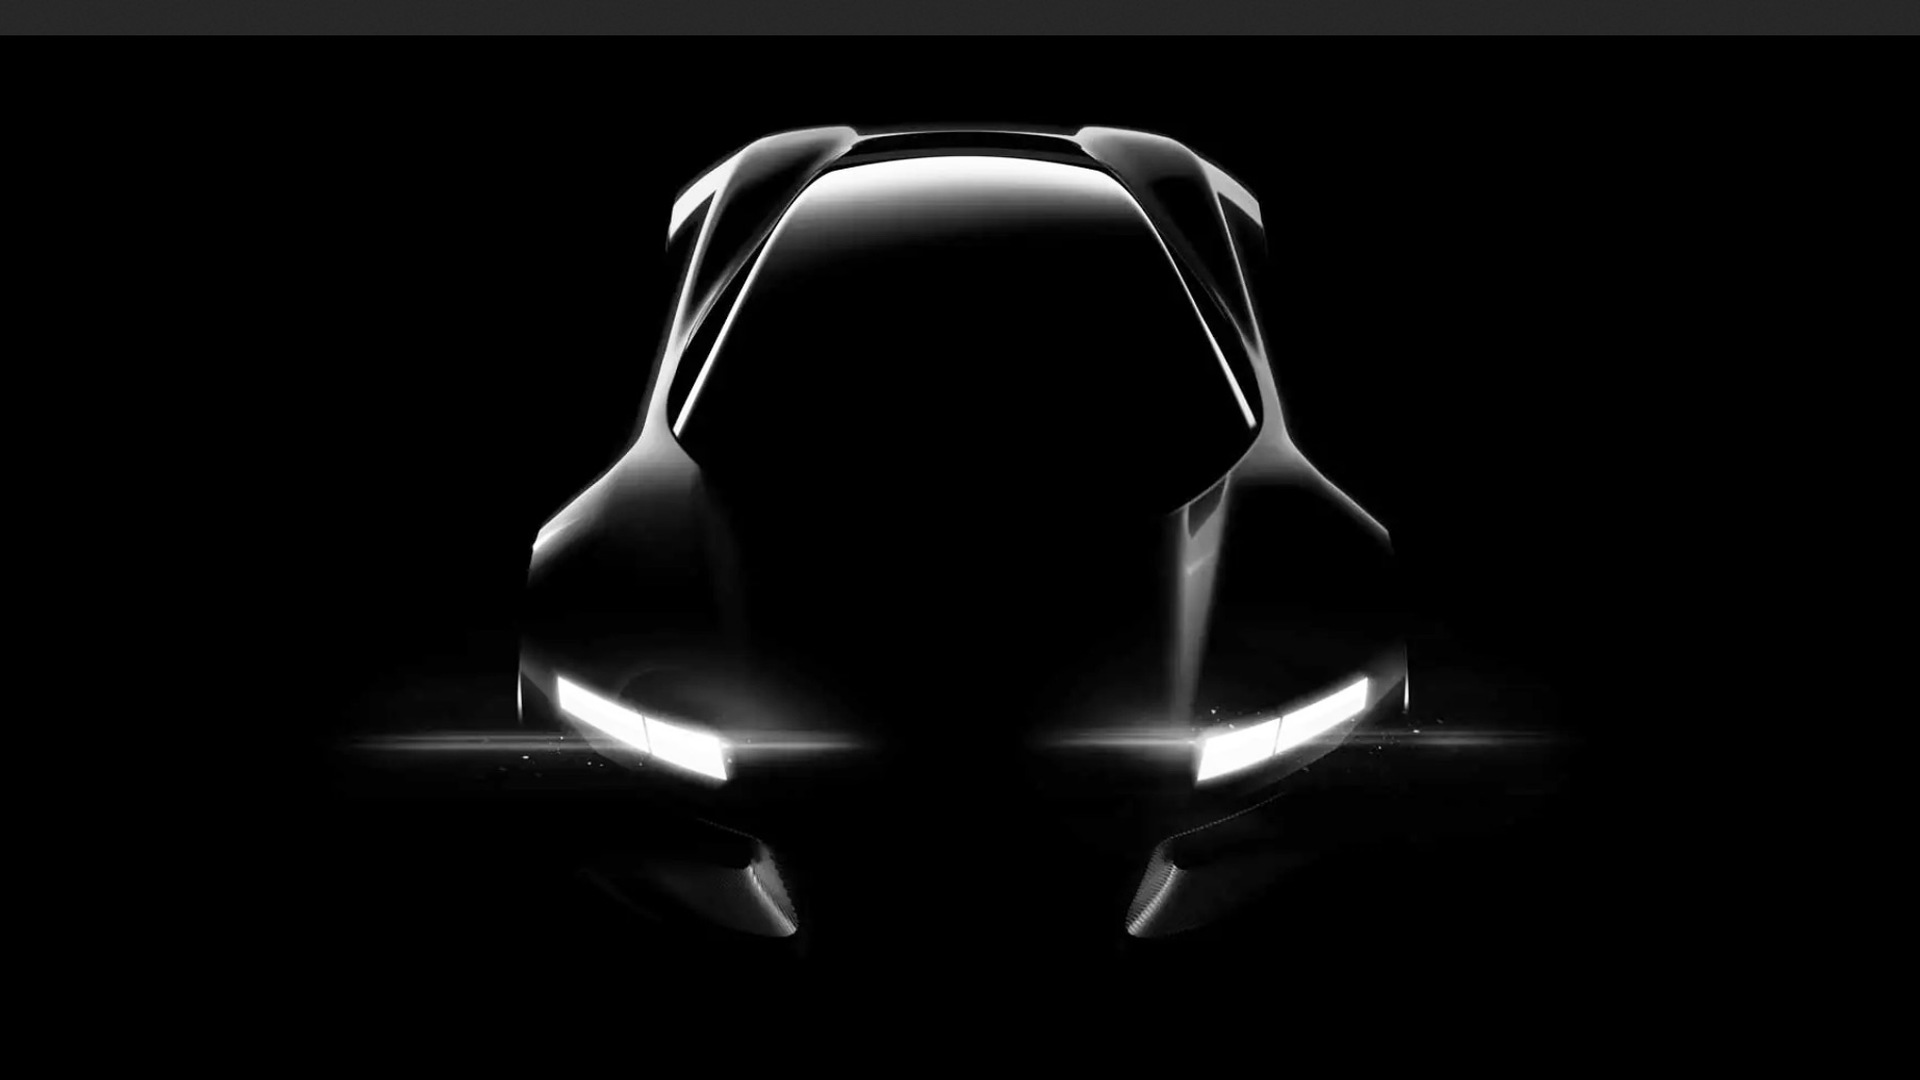 Teaser for Kincsem Hyper-GT due in 2025